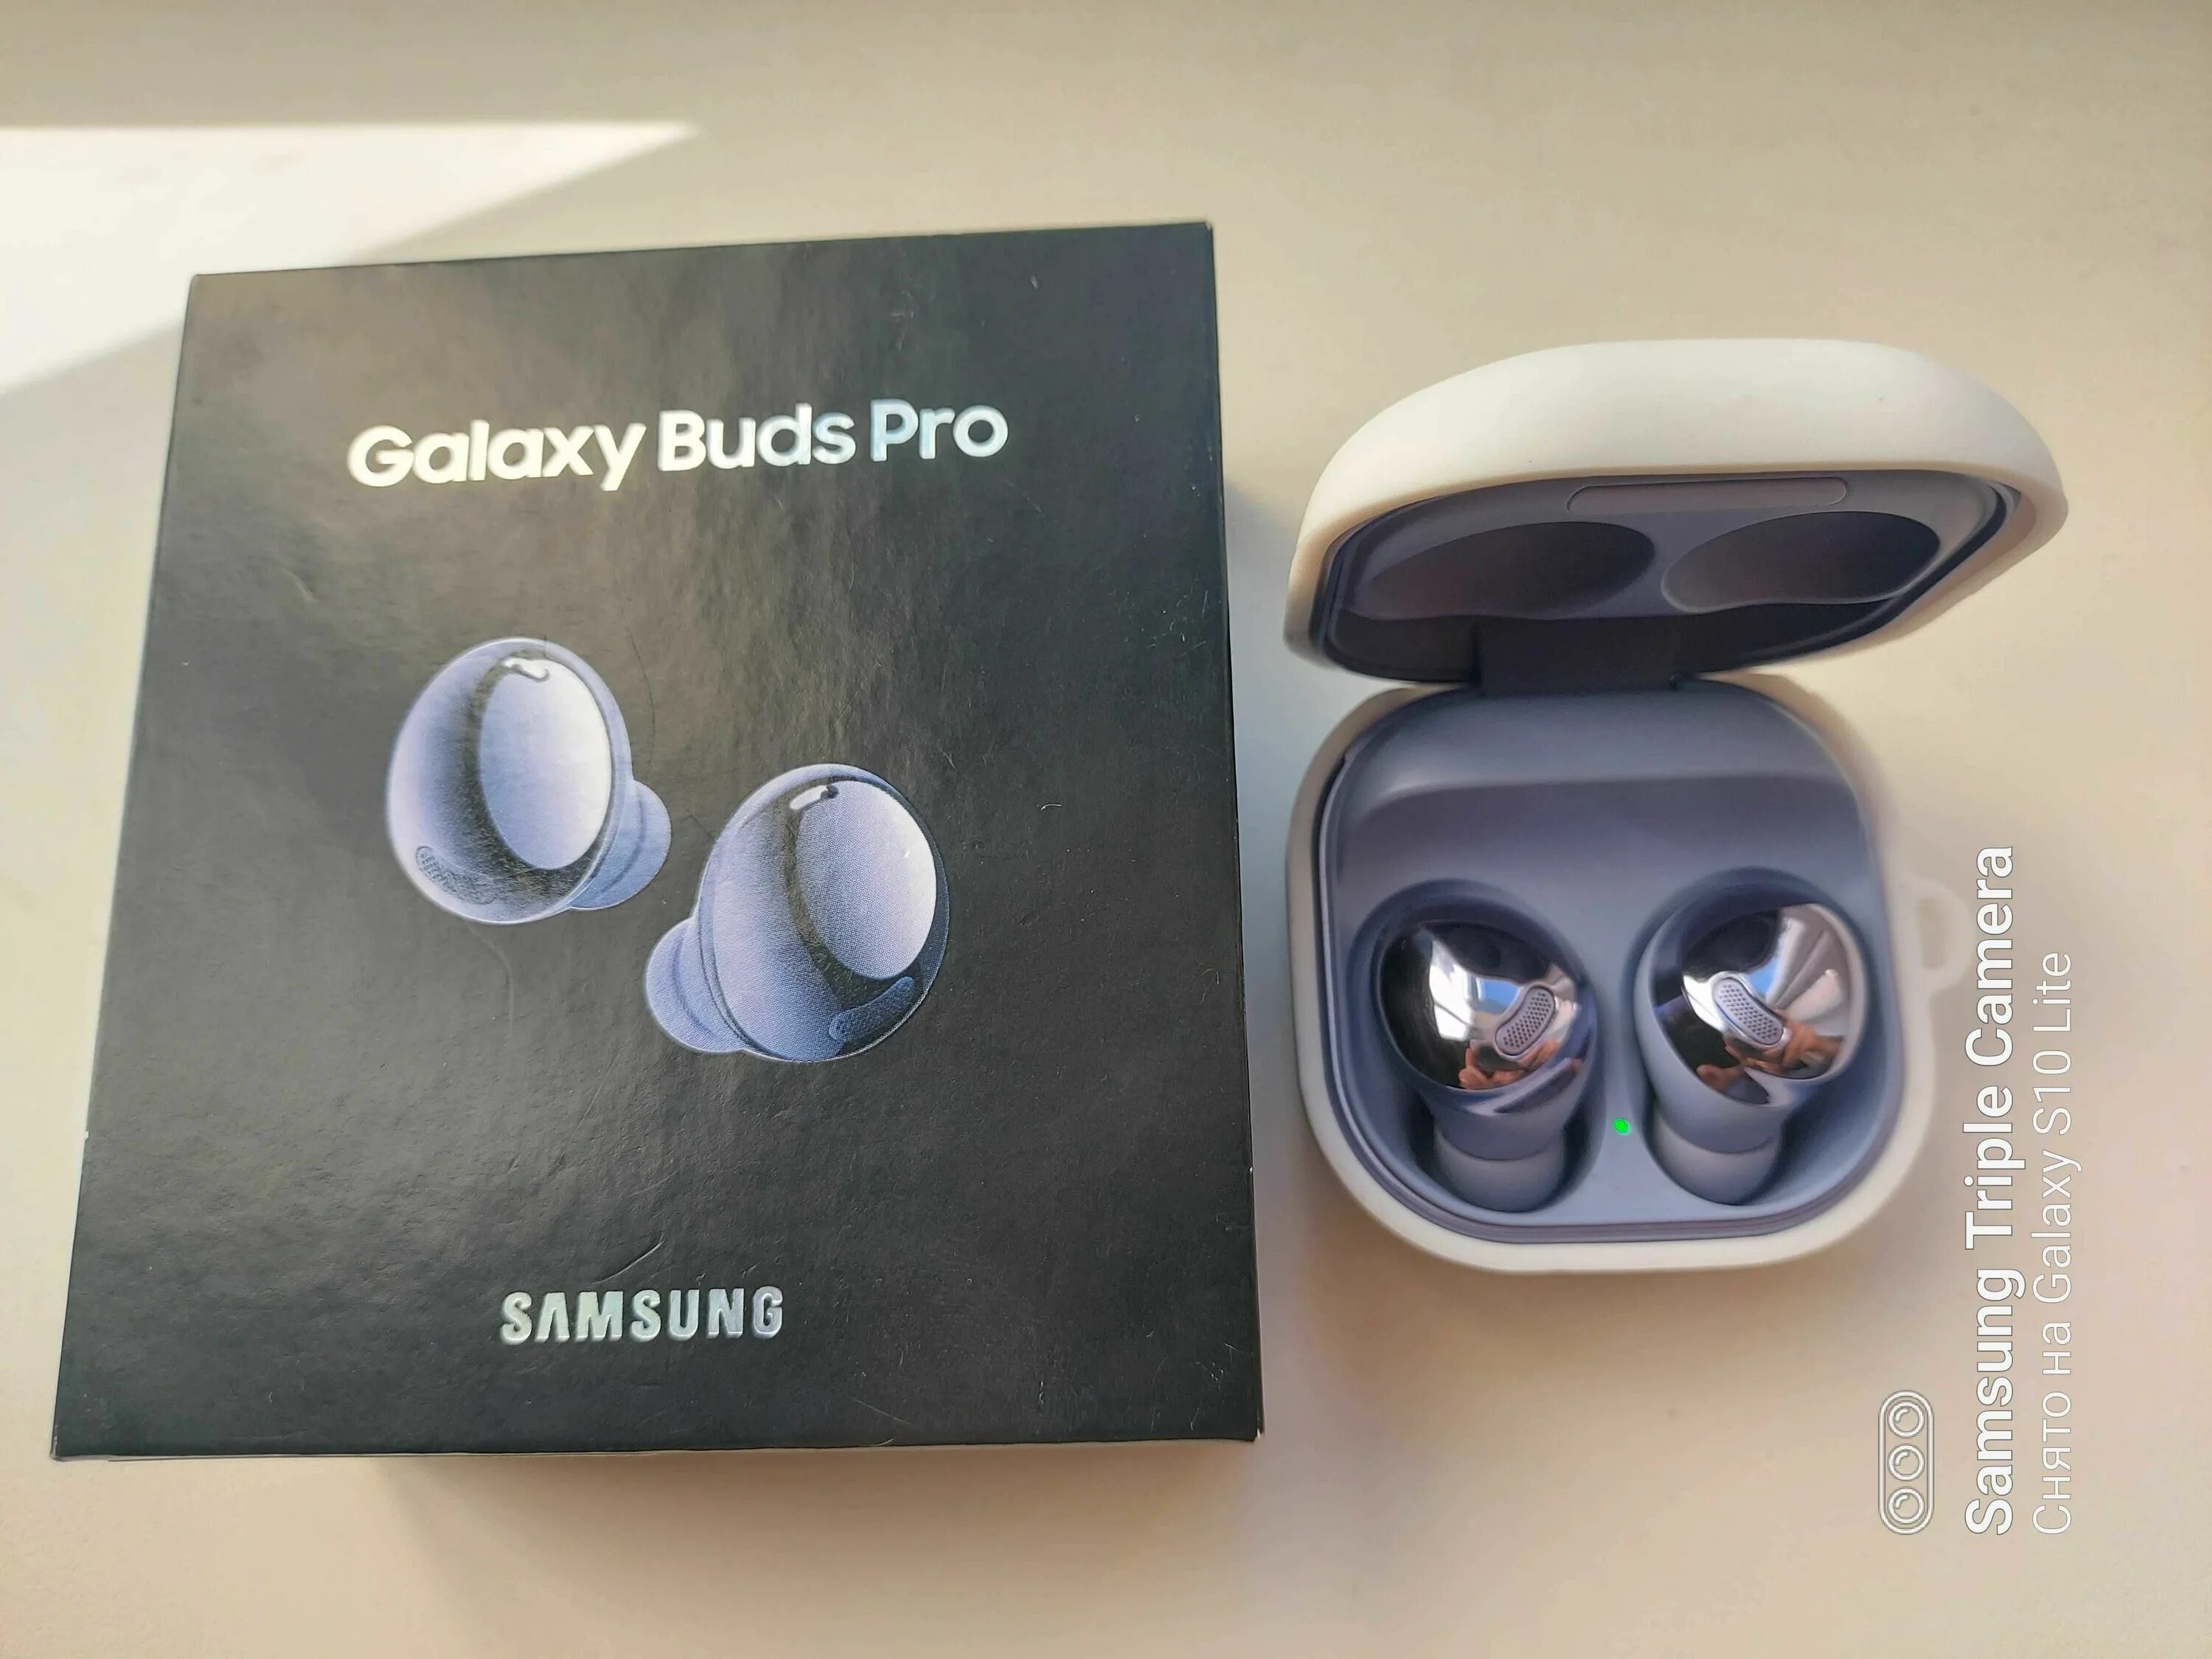 Галакси бадс 2 купить. Galaxy Buds Pro. Samsung Galaxy Buds Pro фиолетовые. Galaxy Buds Pro Violet. Samsung Galaxy Buds Pro Attic Violet (SM-r190nzvacis).